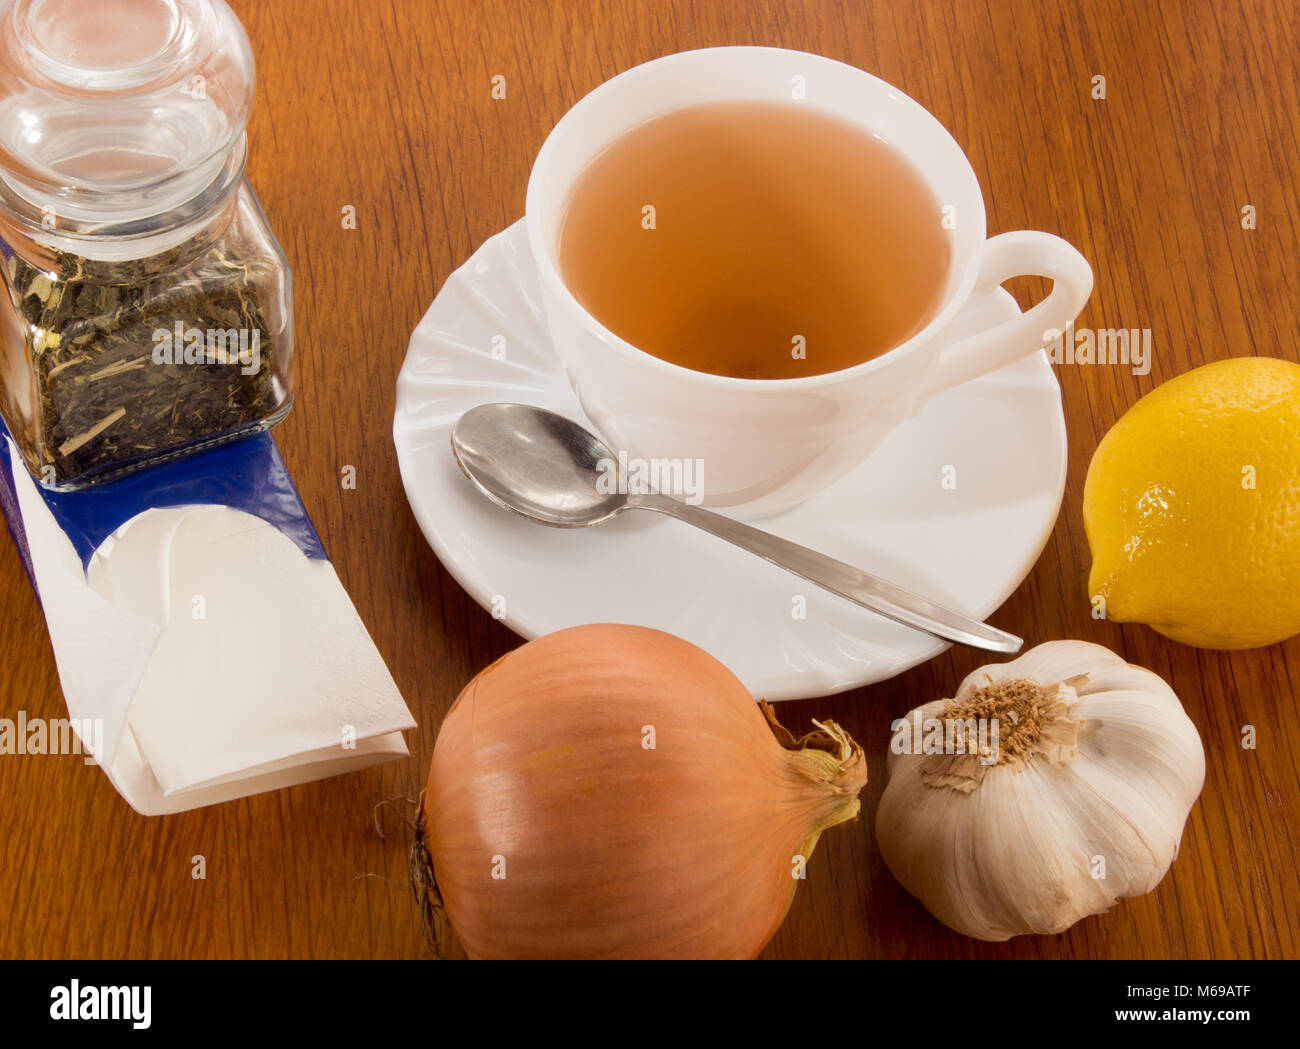 https://c8.alamy.com/comp/M69ATF/a-cup-of-tea-with-saucer-and-spoon-lemon-onion-garlic-a-glass-dose-M69ATF.jpg